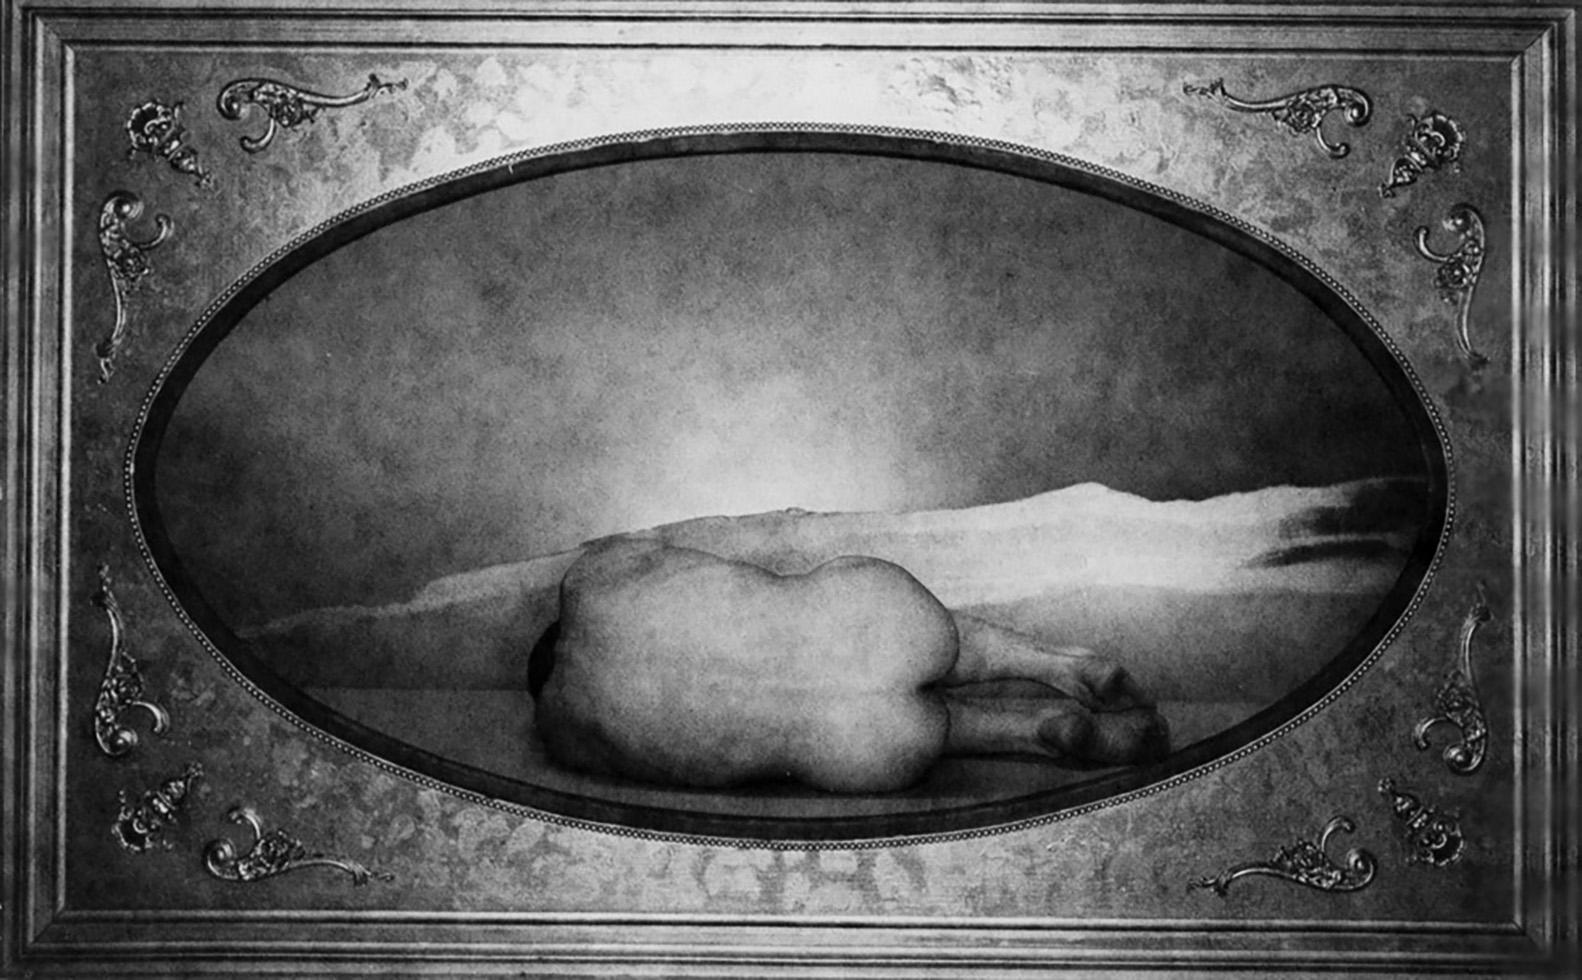 Mel Fillini in Frame #2 [Male Nude in Cartouche] - Photograph by George Platt Lynes